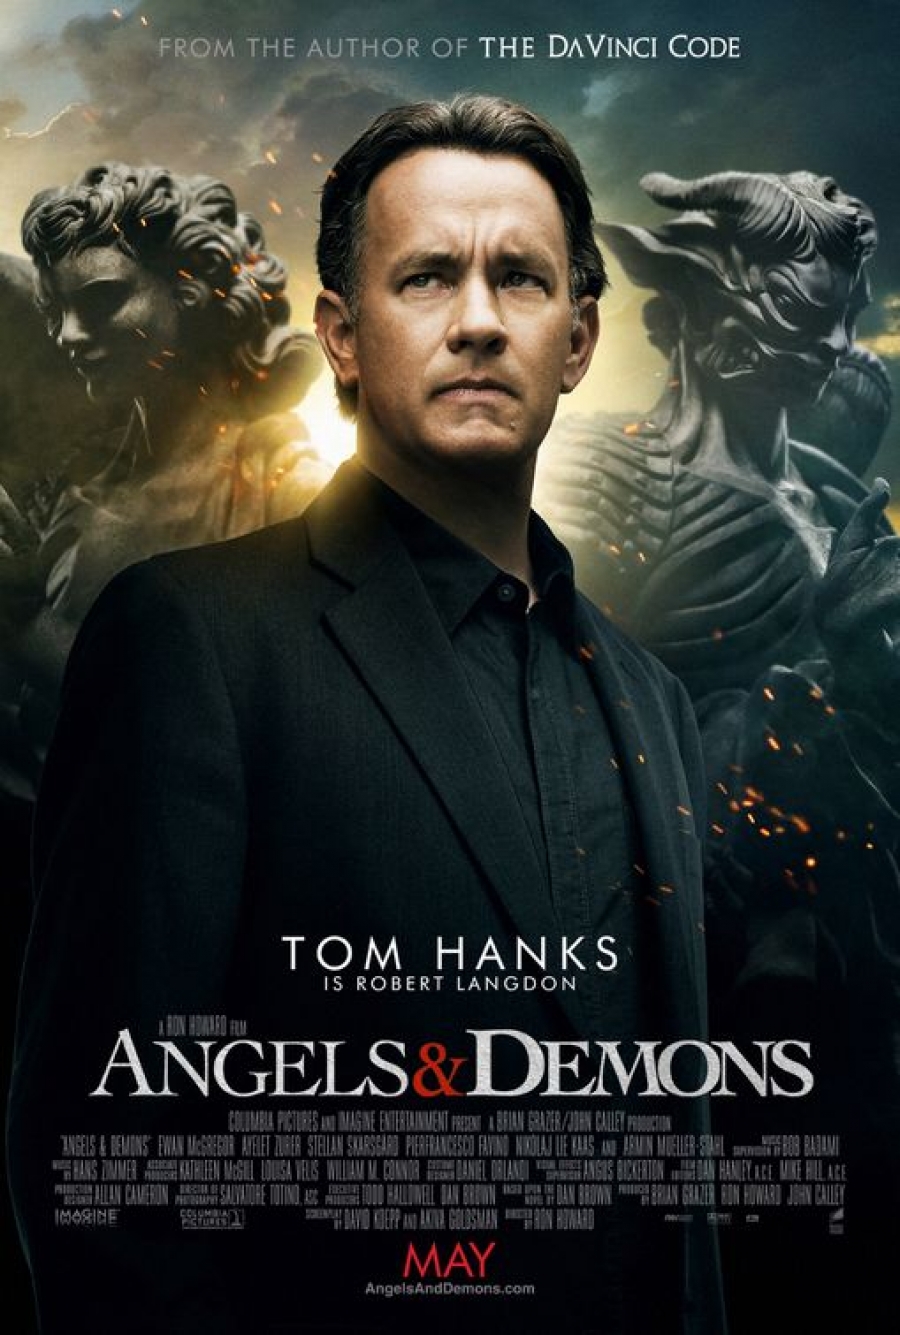 Angels and Demons (2009) เทวากับซาตาน